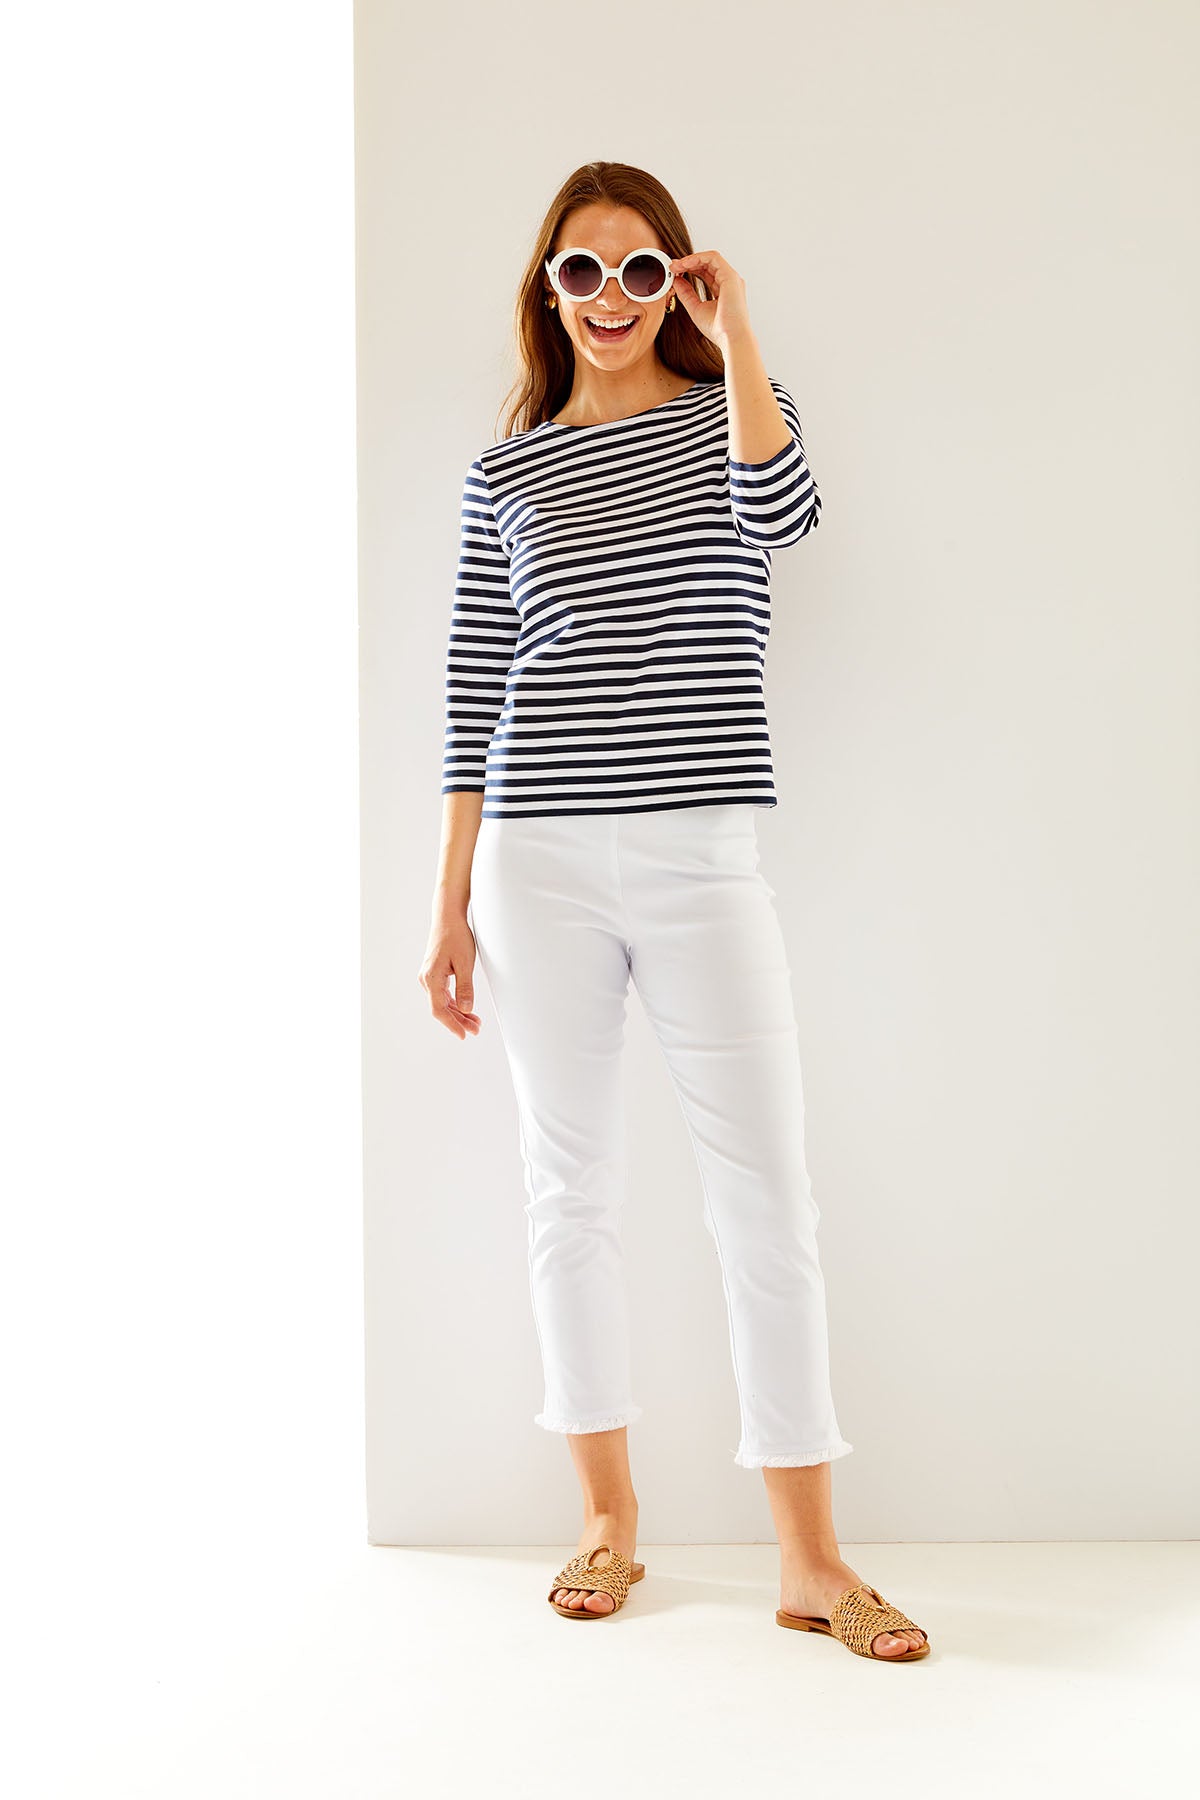 Woman in navy/white stripe top